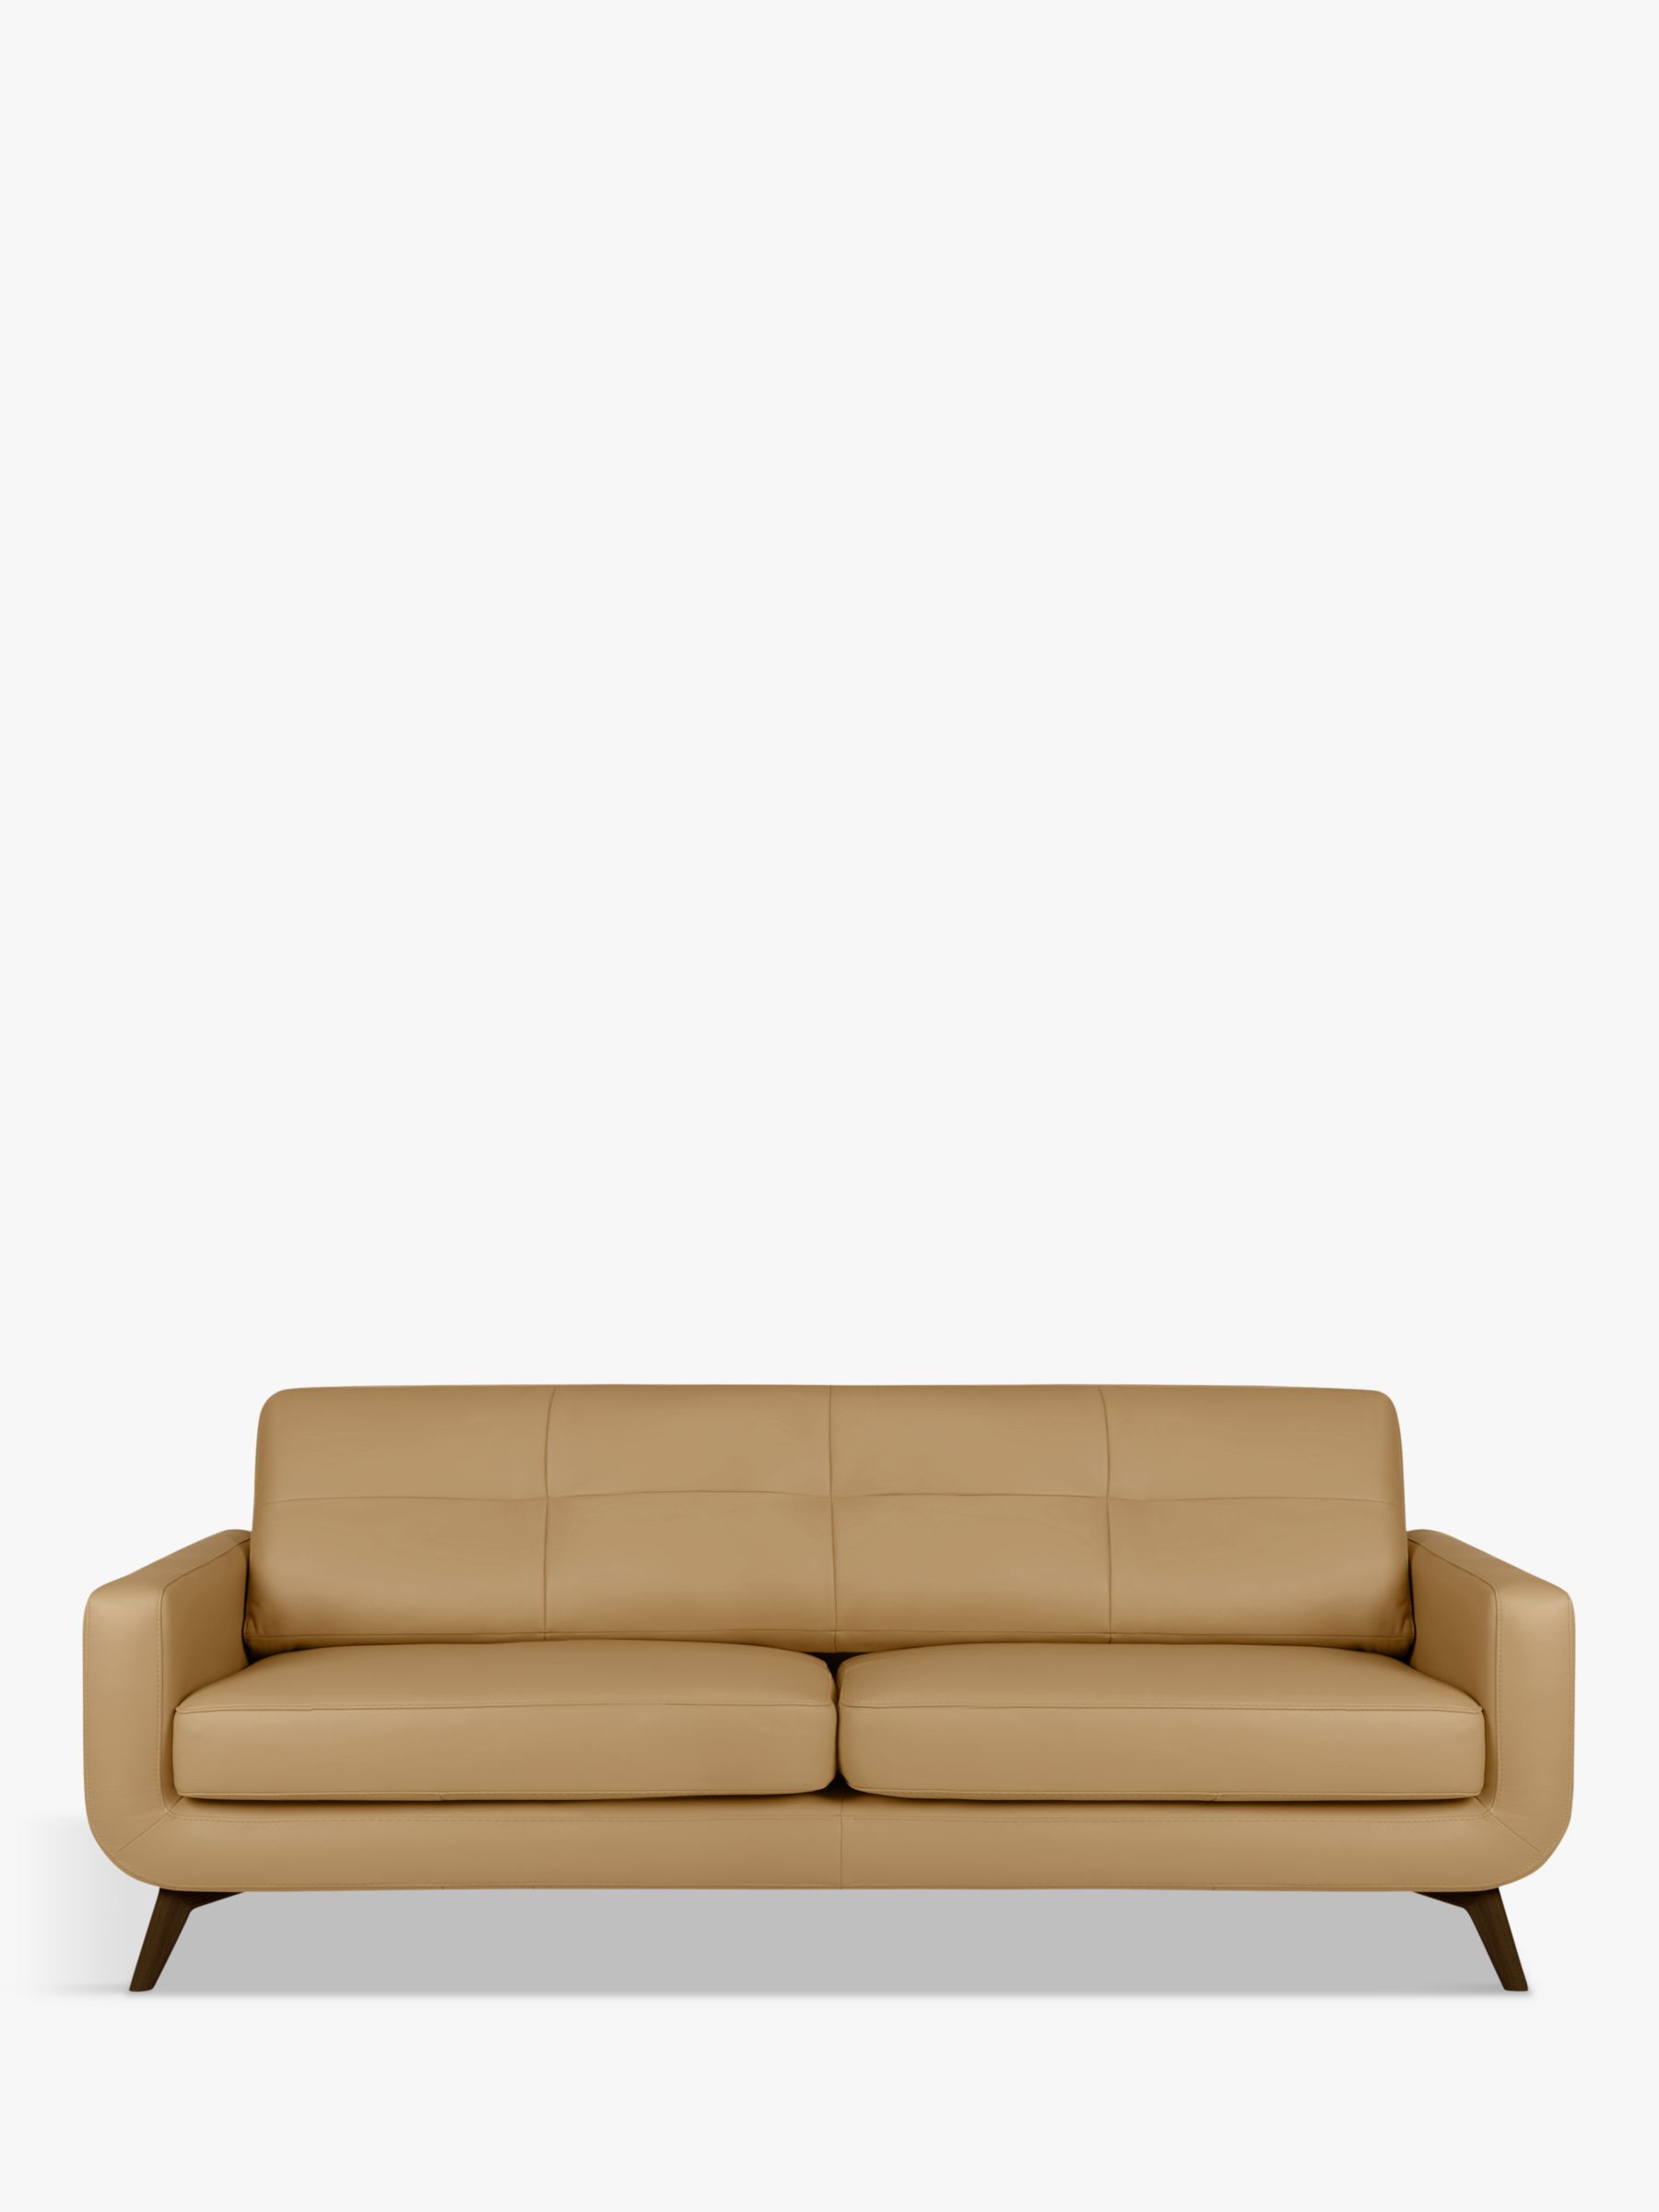 John Lewis Barbican Grand 4 Seater Leather Sofa, Dark Leg